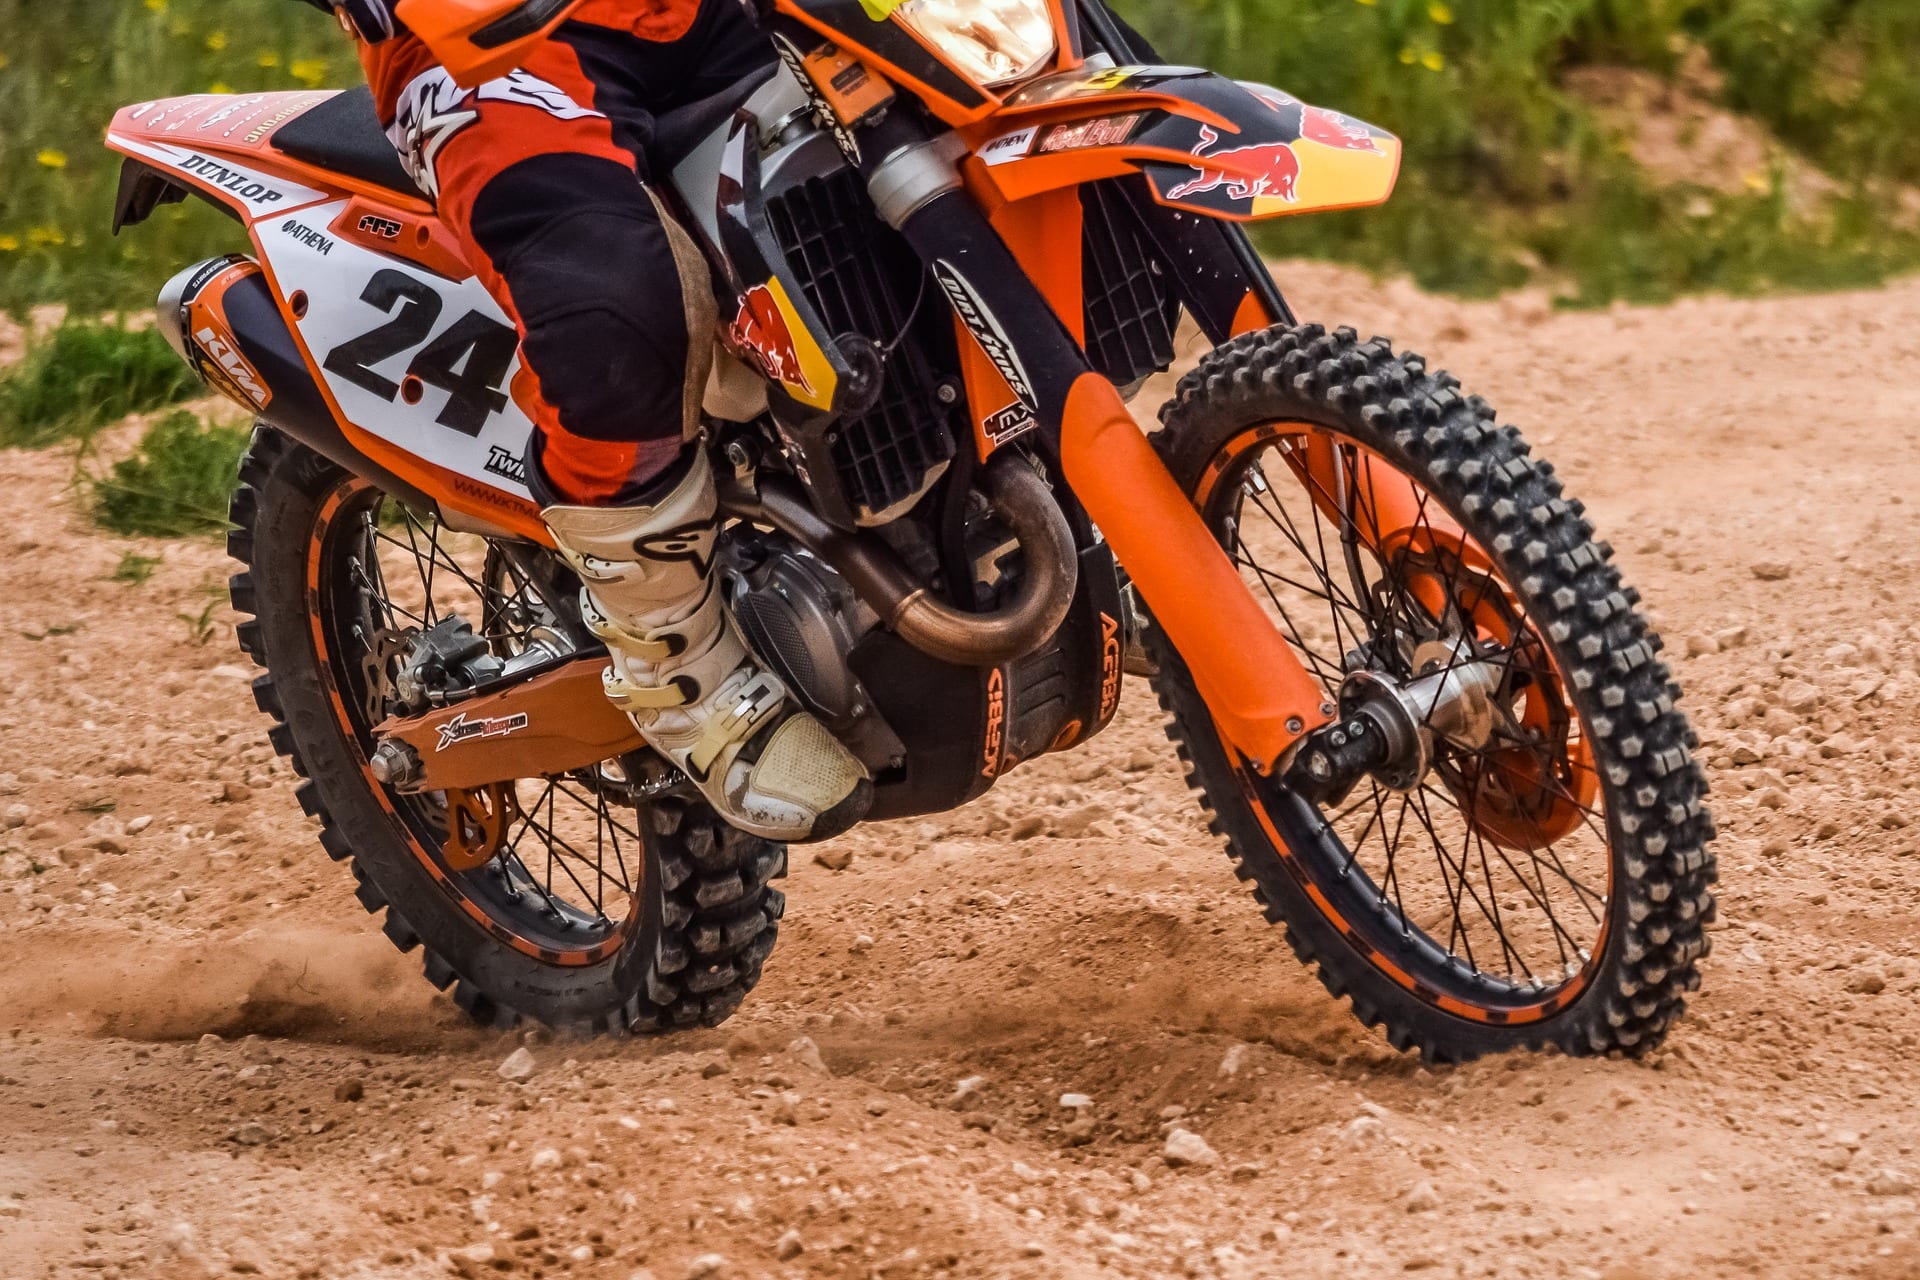 Focused on the wheels of an orange dirt bike